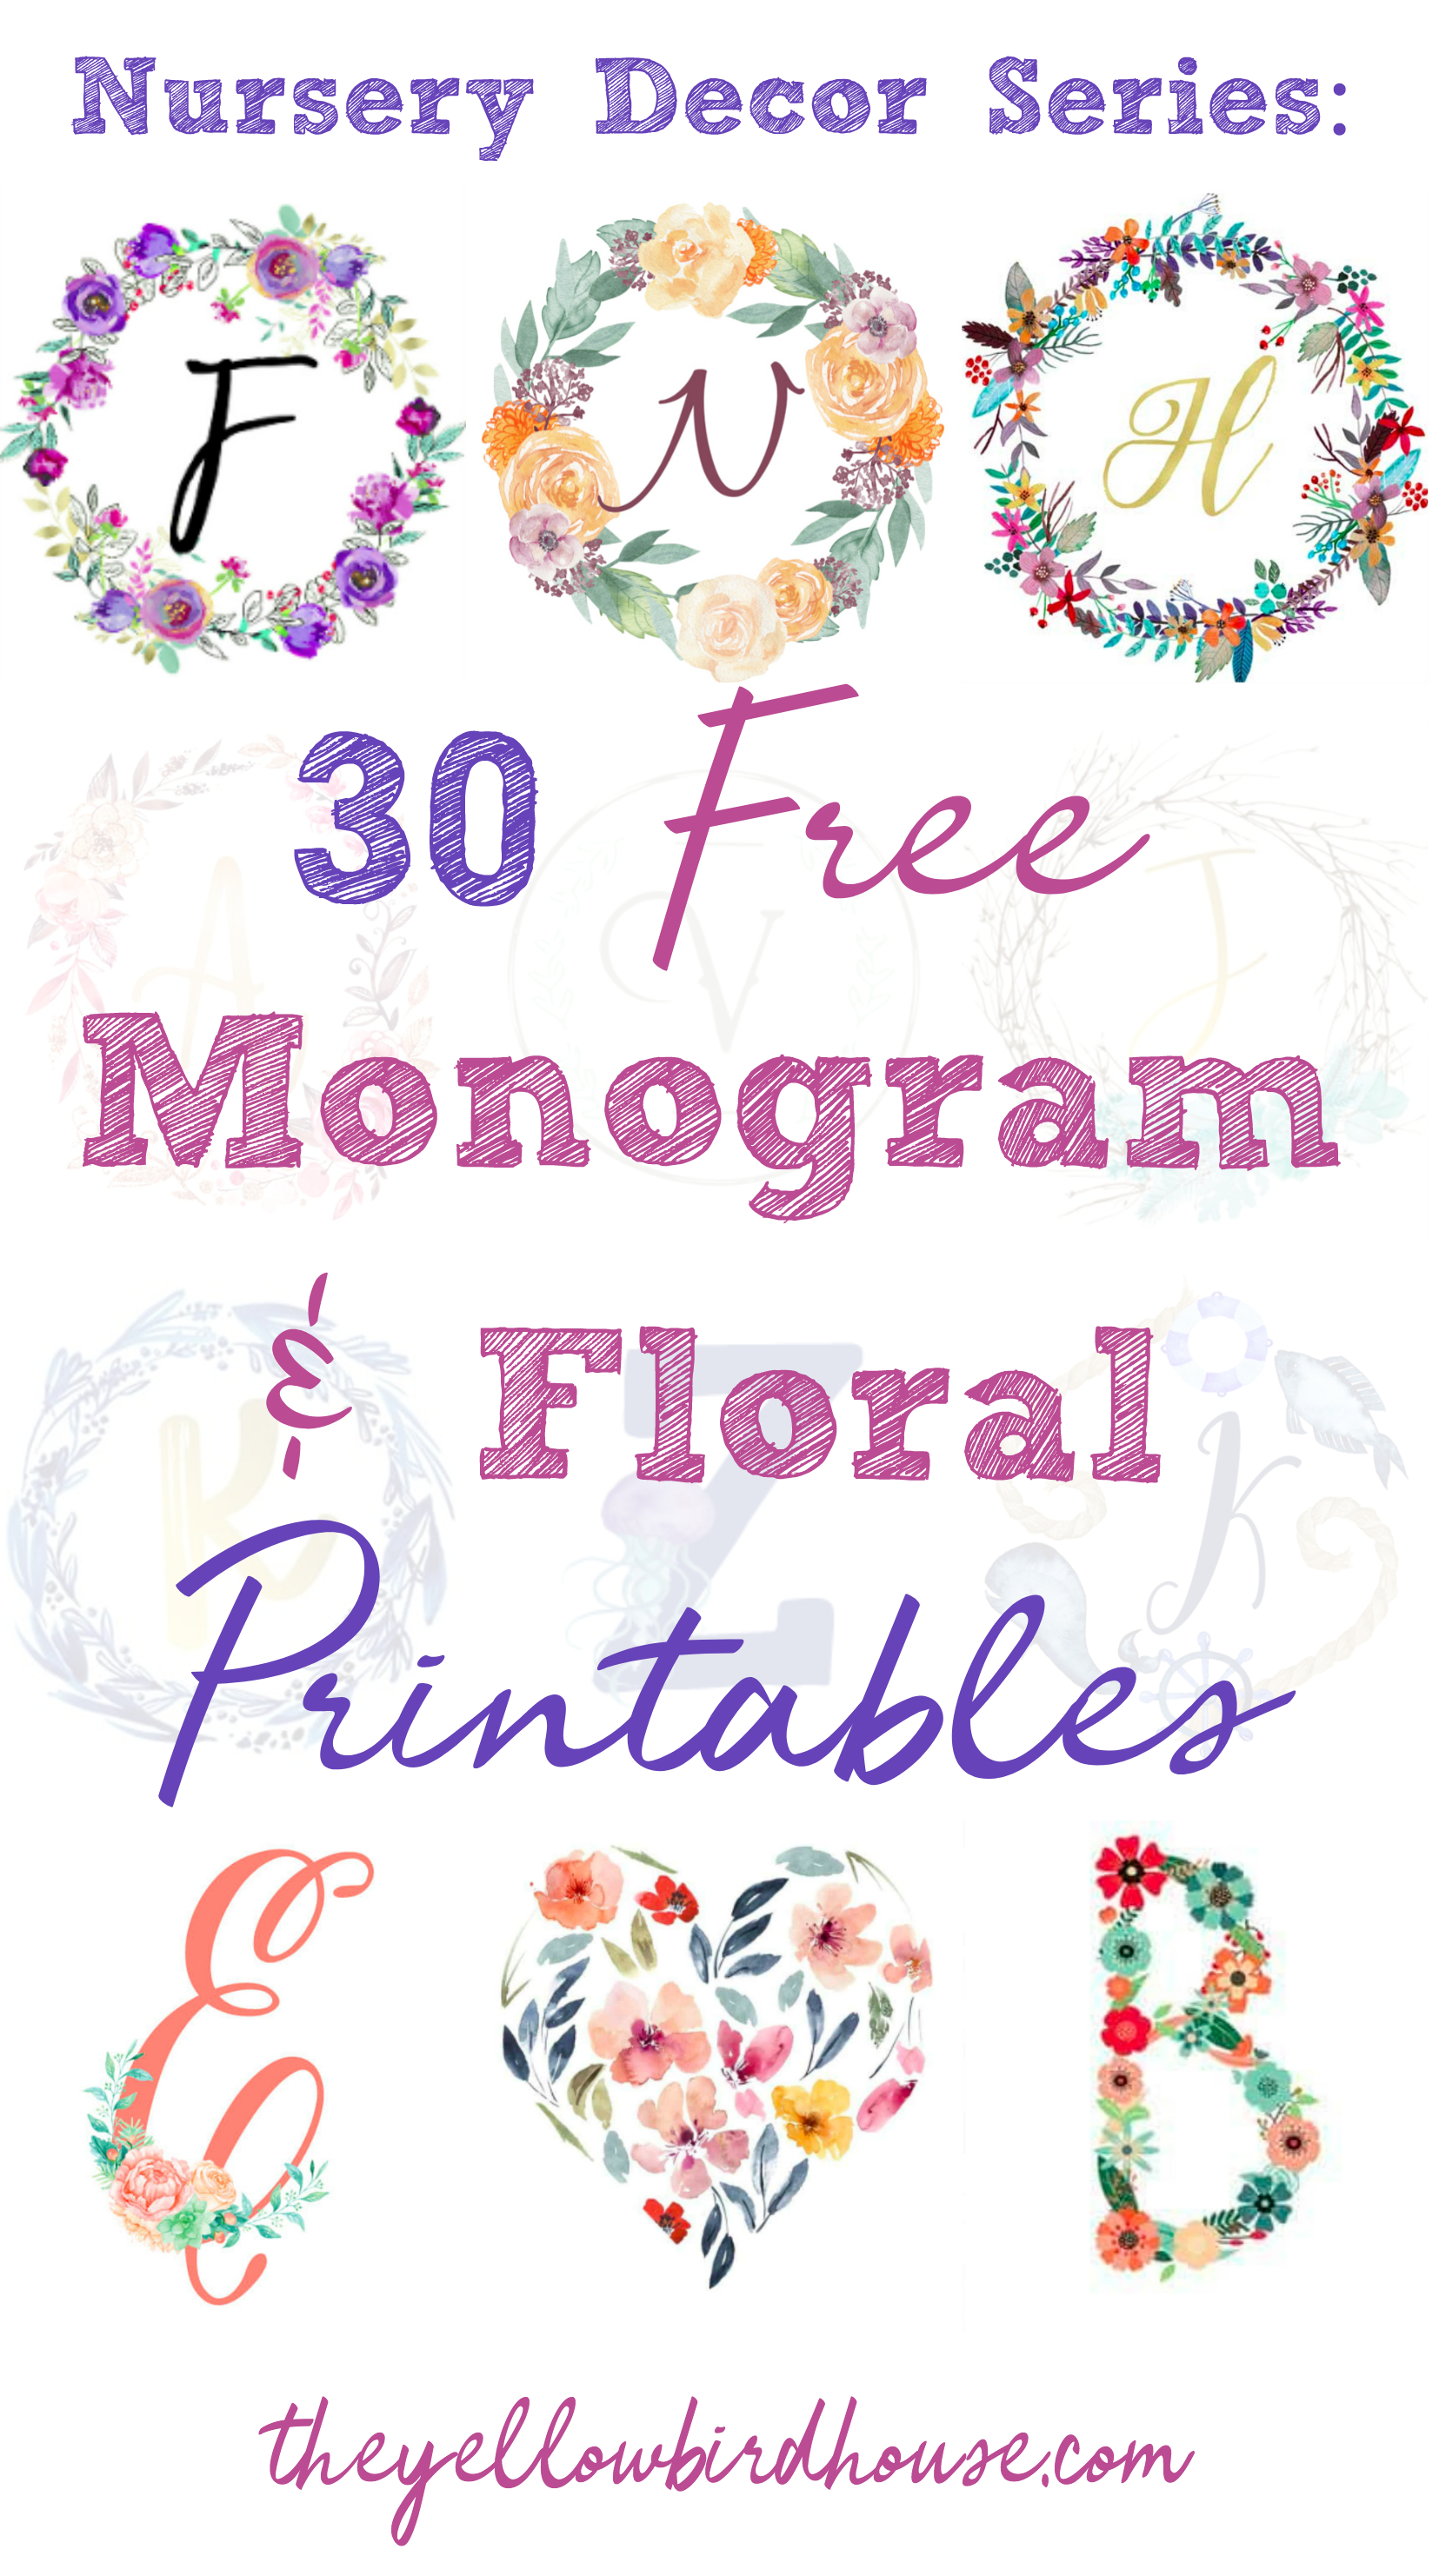 Nursery Decor Series: 30 Free Monogram Printables - Free Printable Monogram Letters